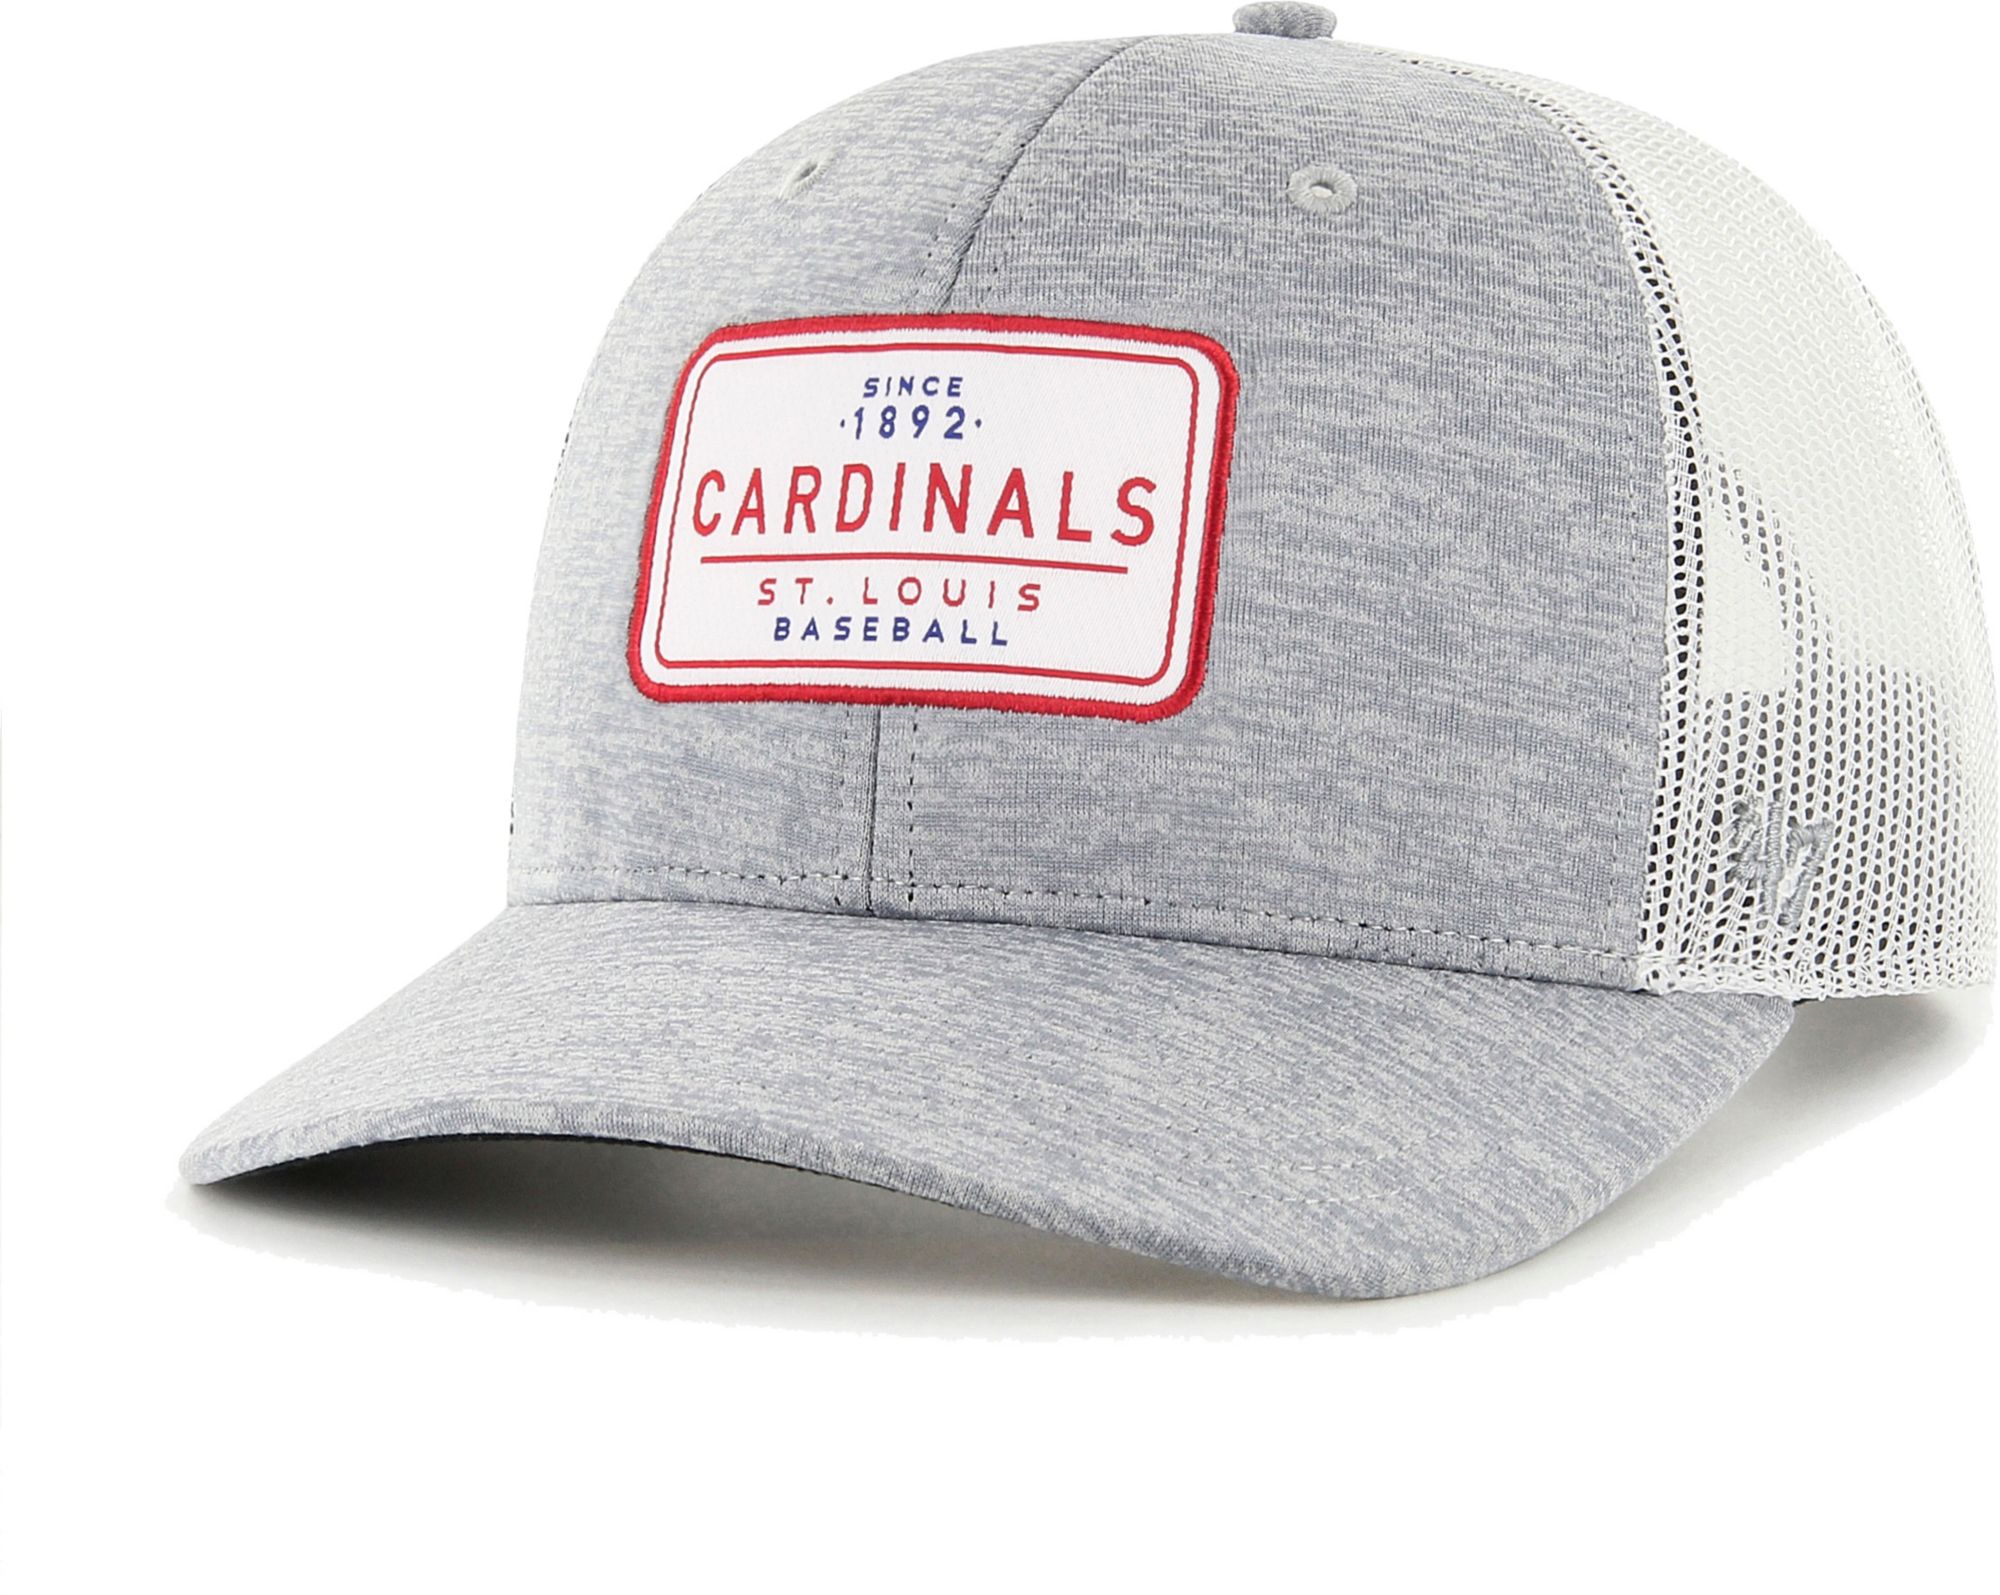 47 Men's St. Louis Cardinals Red Sidenote Trucker Hat